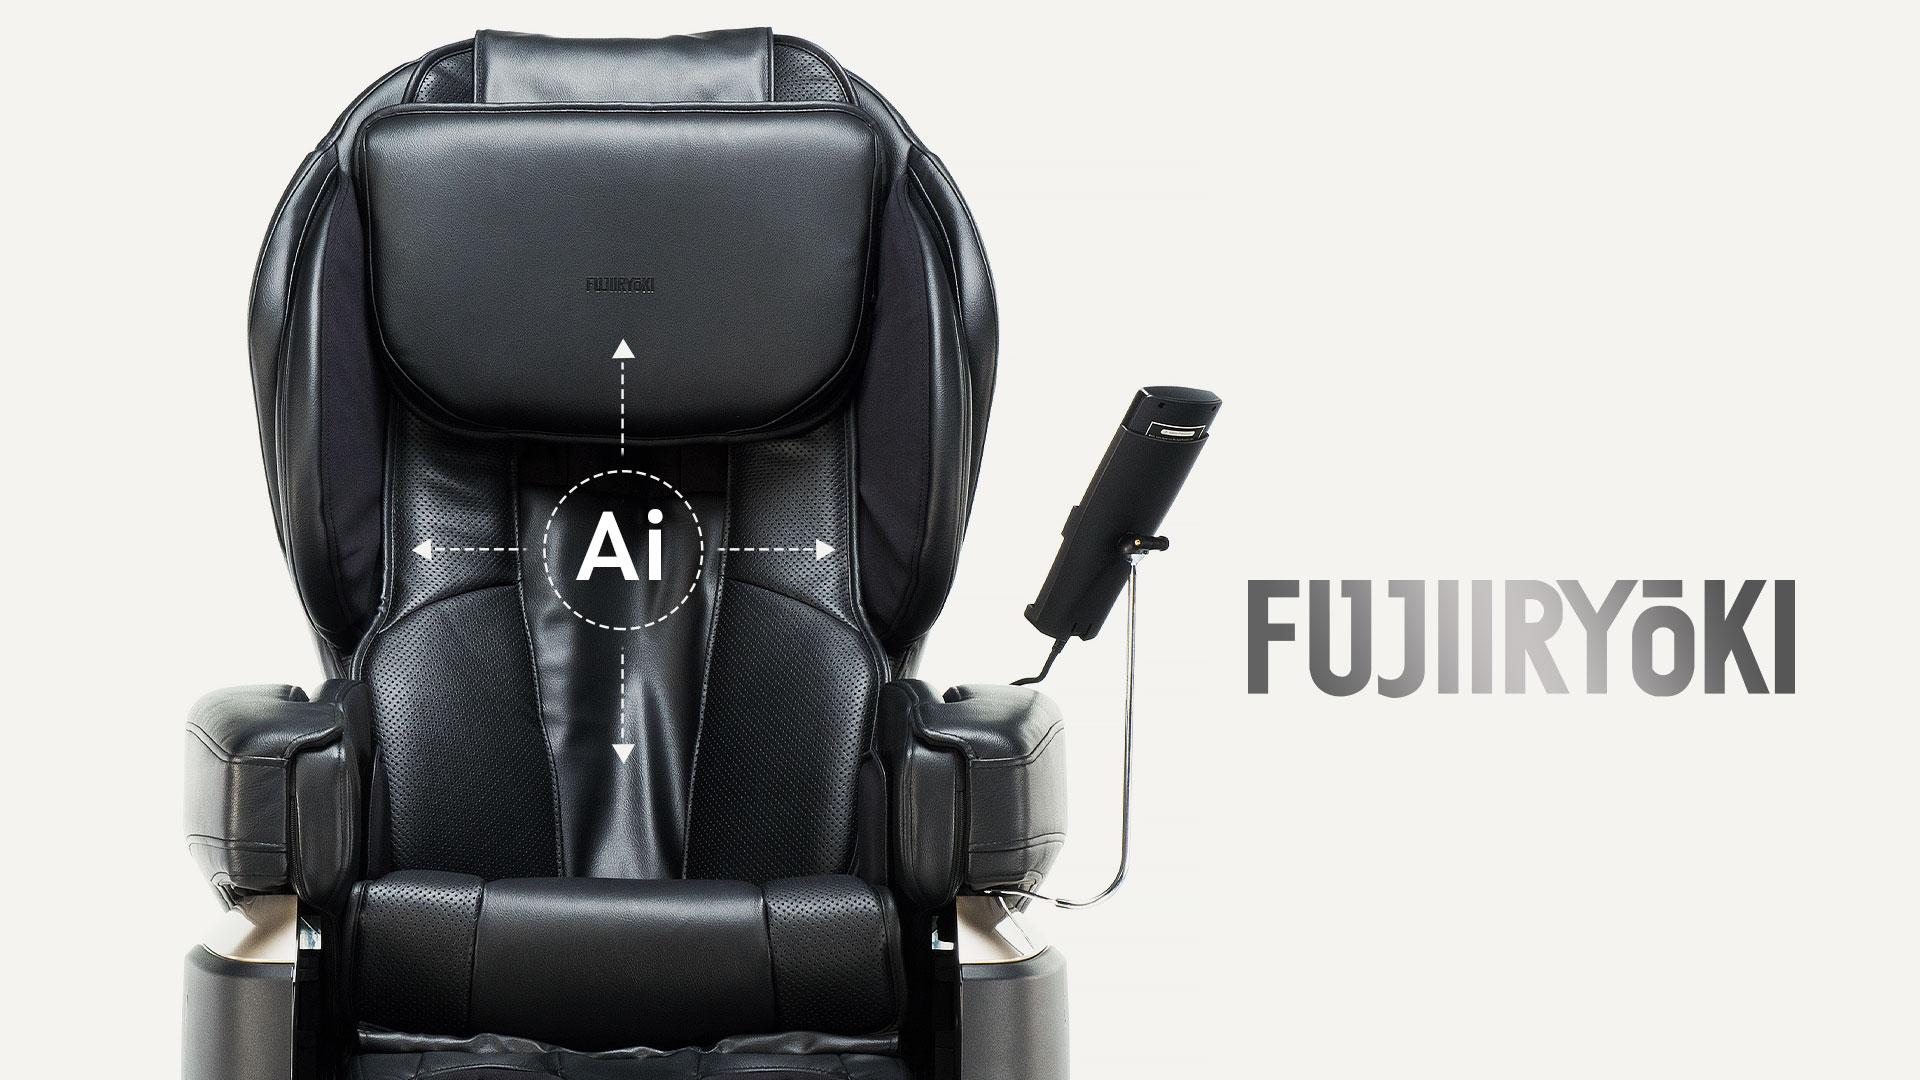 Artificial intelligence in the Fujiiryoki massage chair?